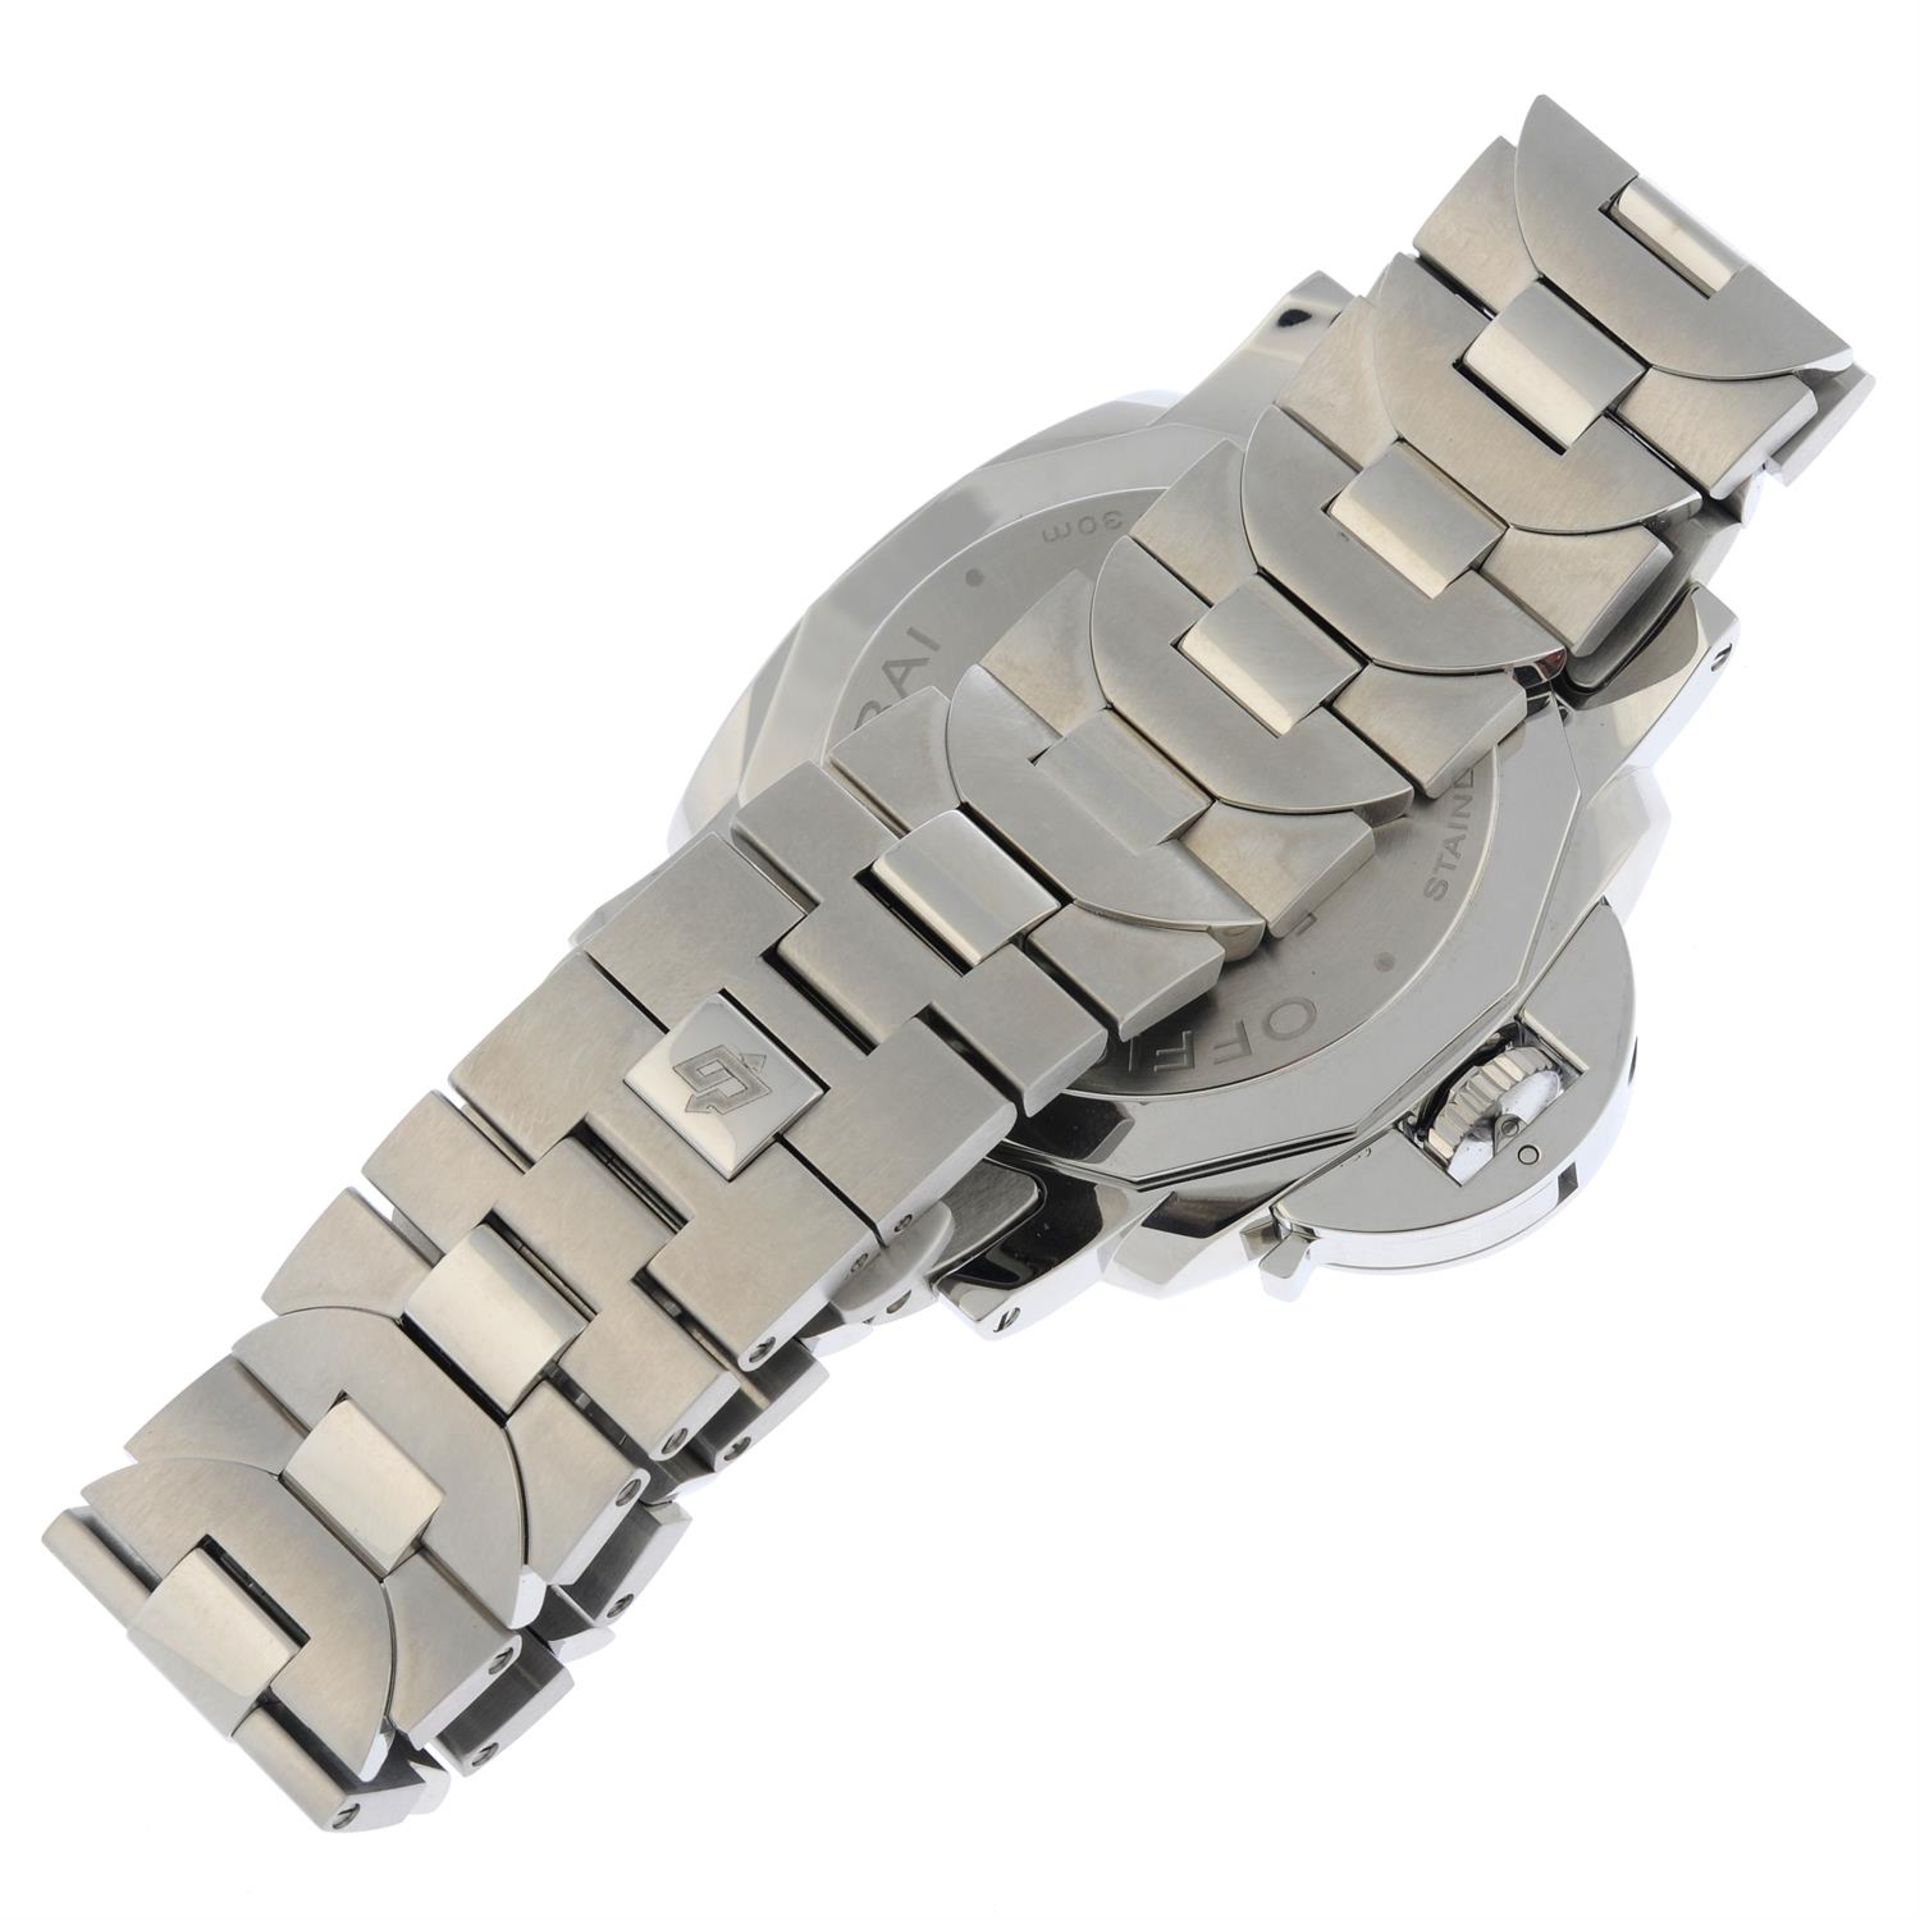 PANERAI - a limited edition stainless steel Luminor Due bracelet watch, 42mm. - Bild 2 aus 6